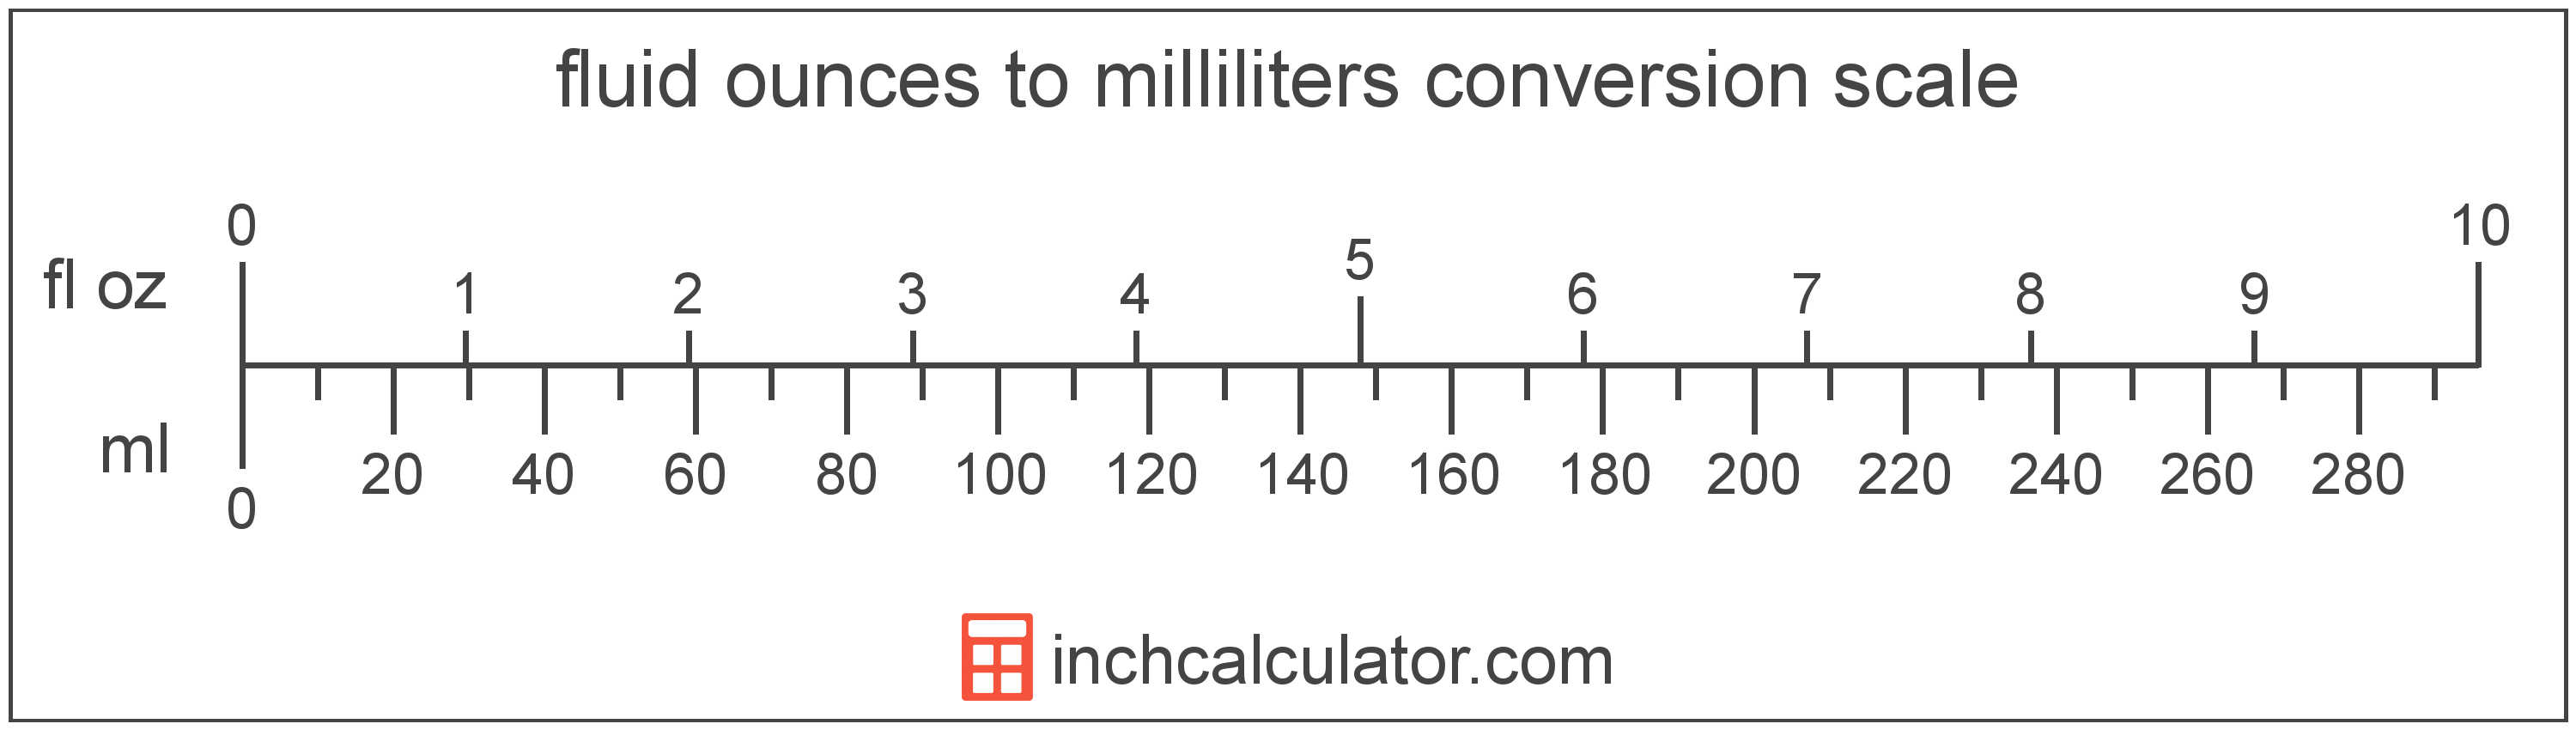 fluid-ounces-to-milliliters-conversion-fl-oz-to-ml